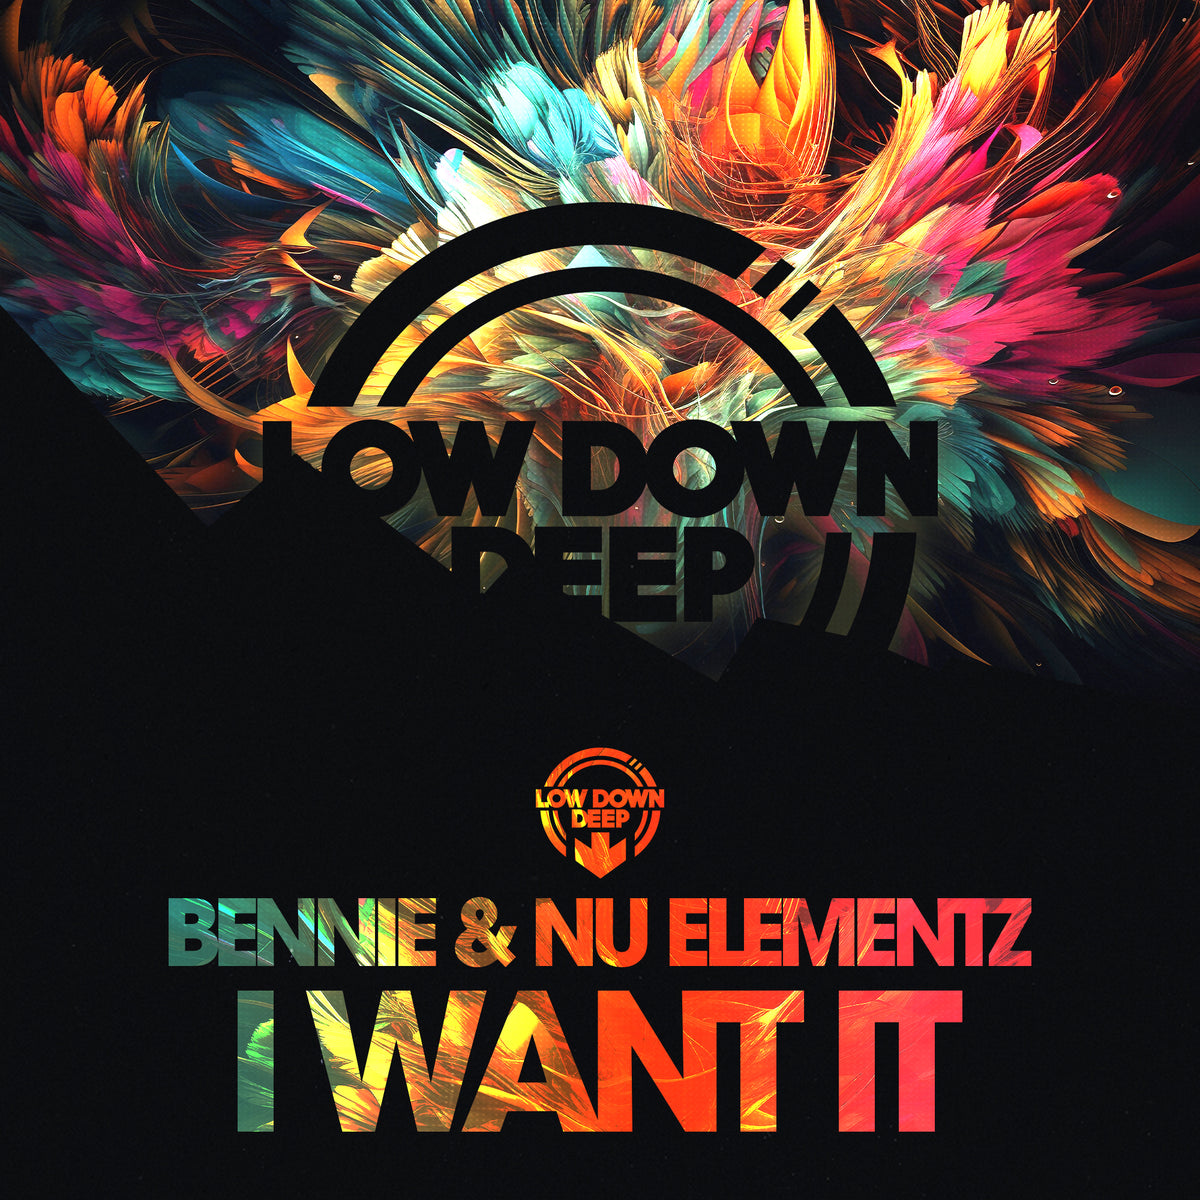 LDD228 - Bennie & Nu Elementz 'I Want It'